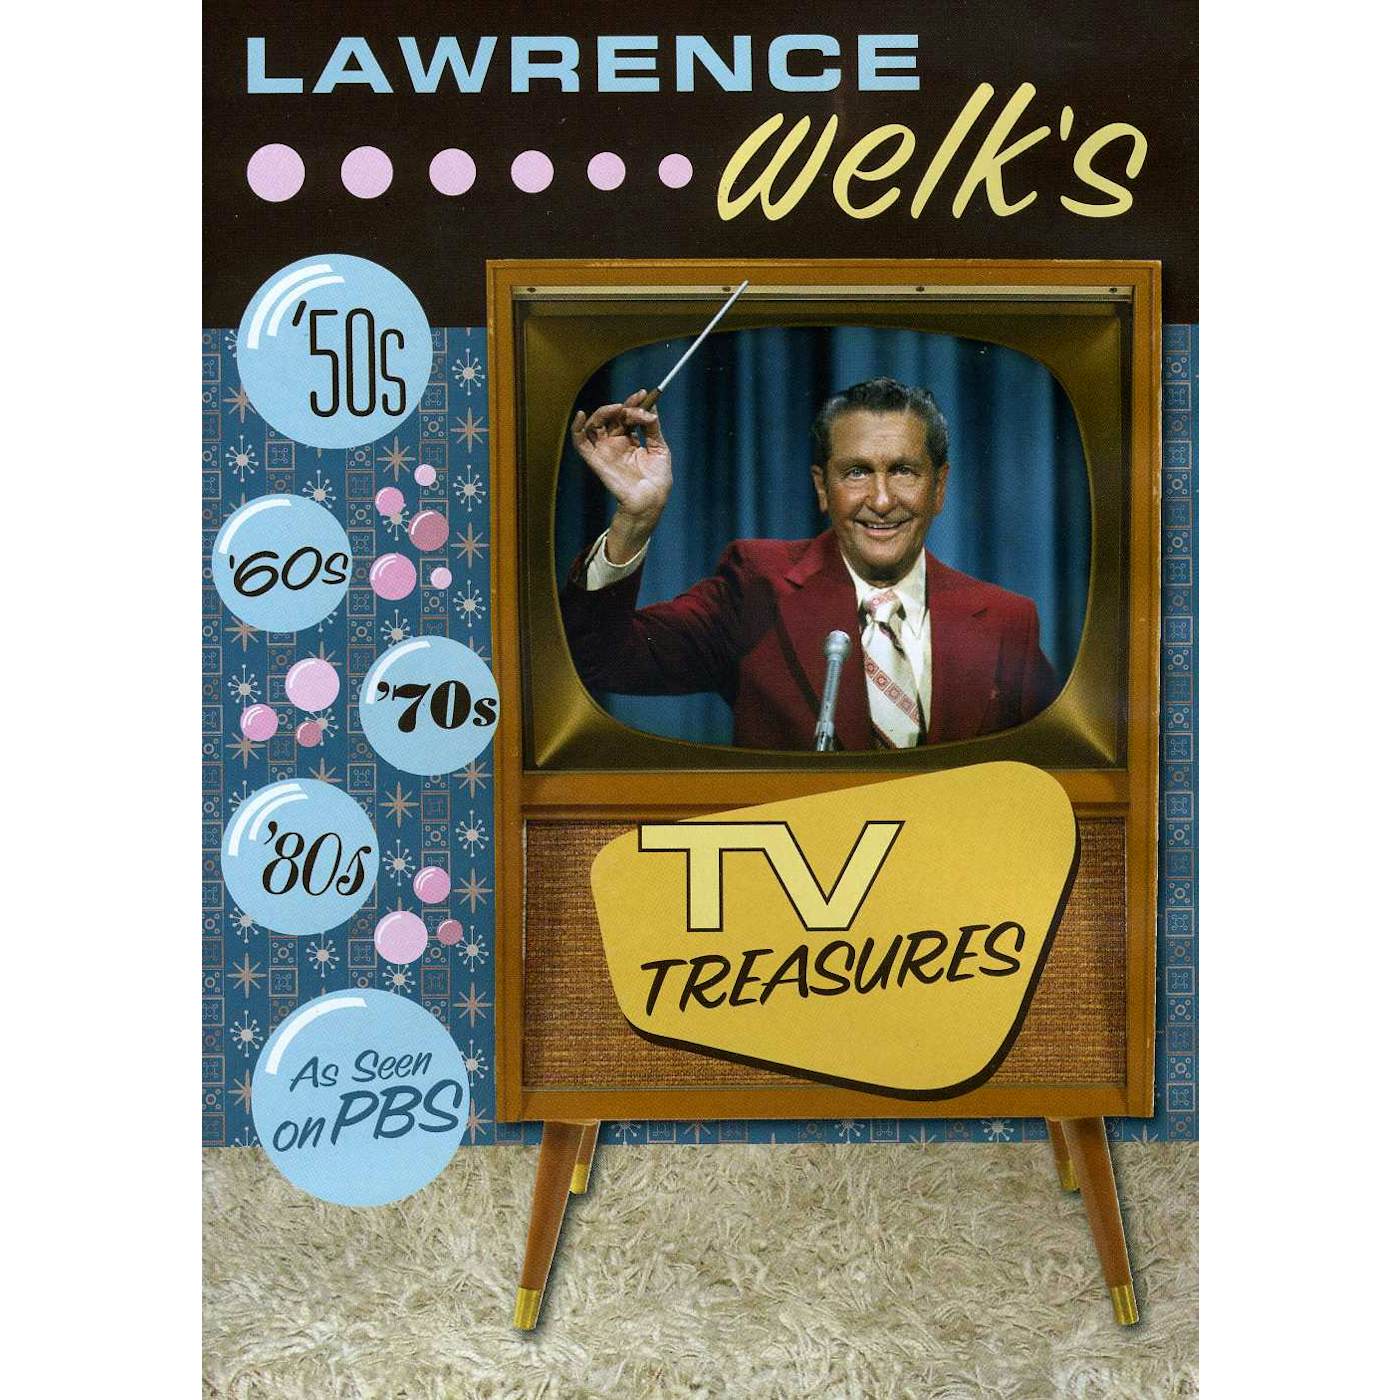 Lawrence Welk TV TREASURES DVD